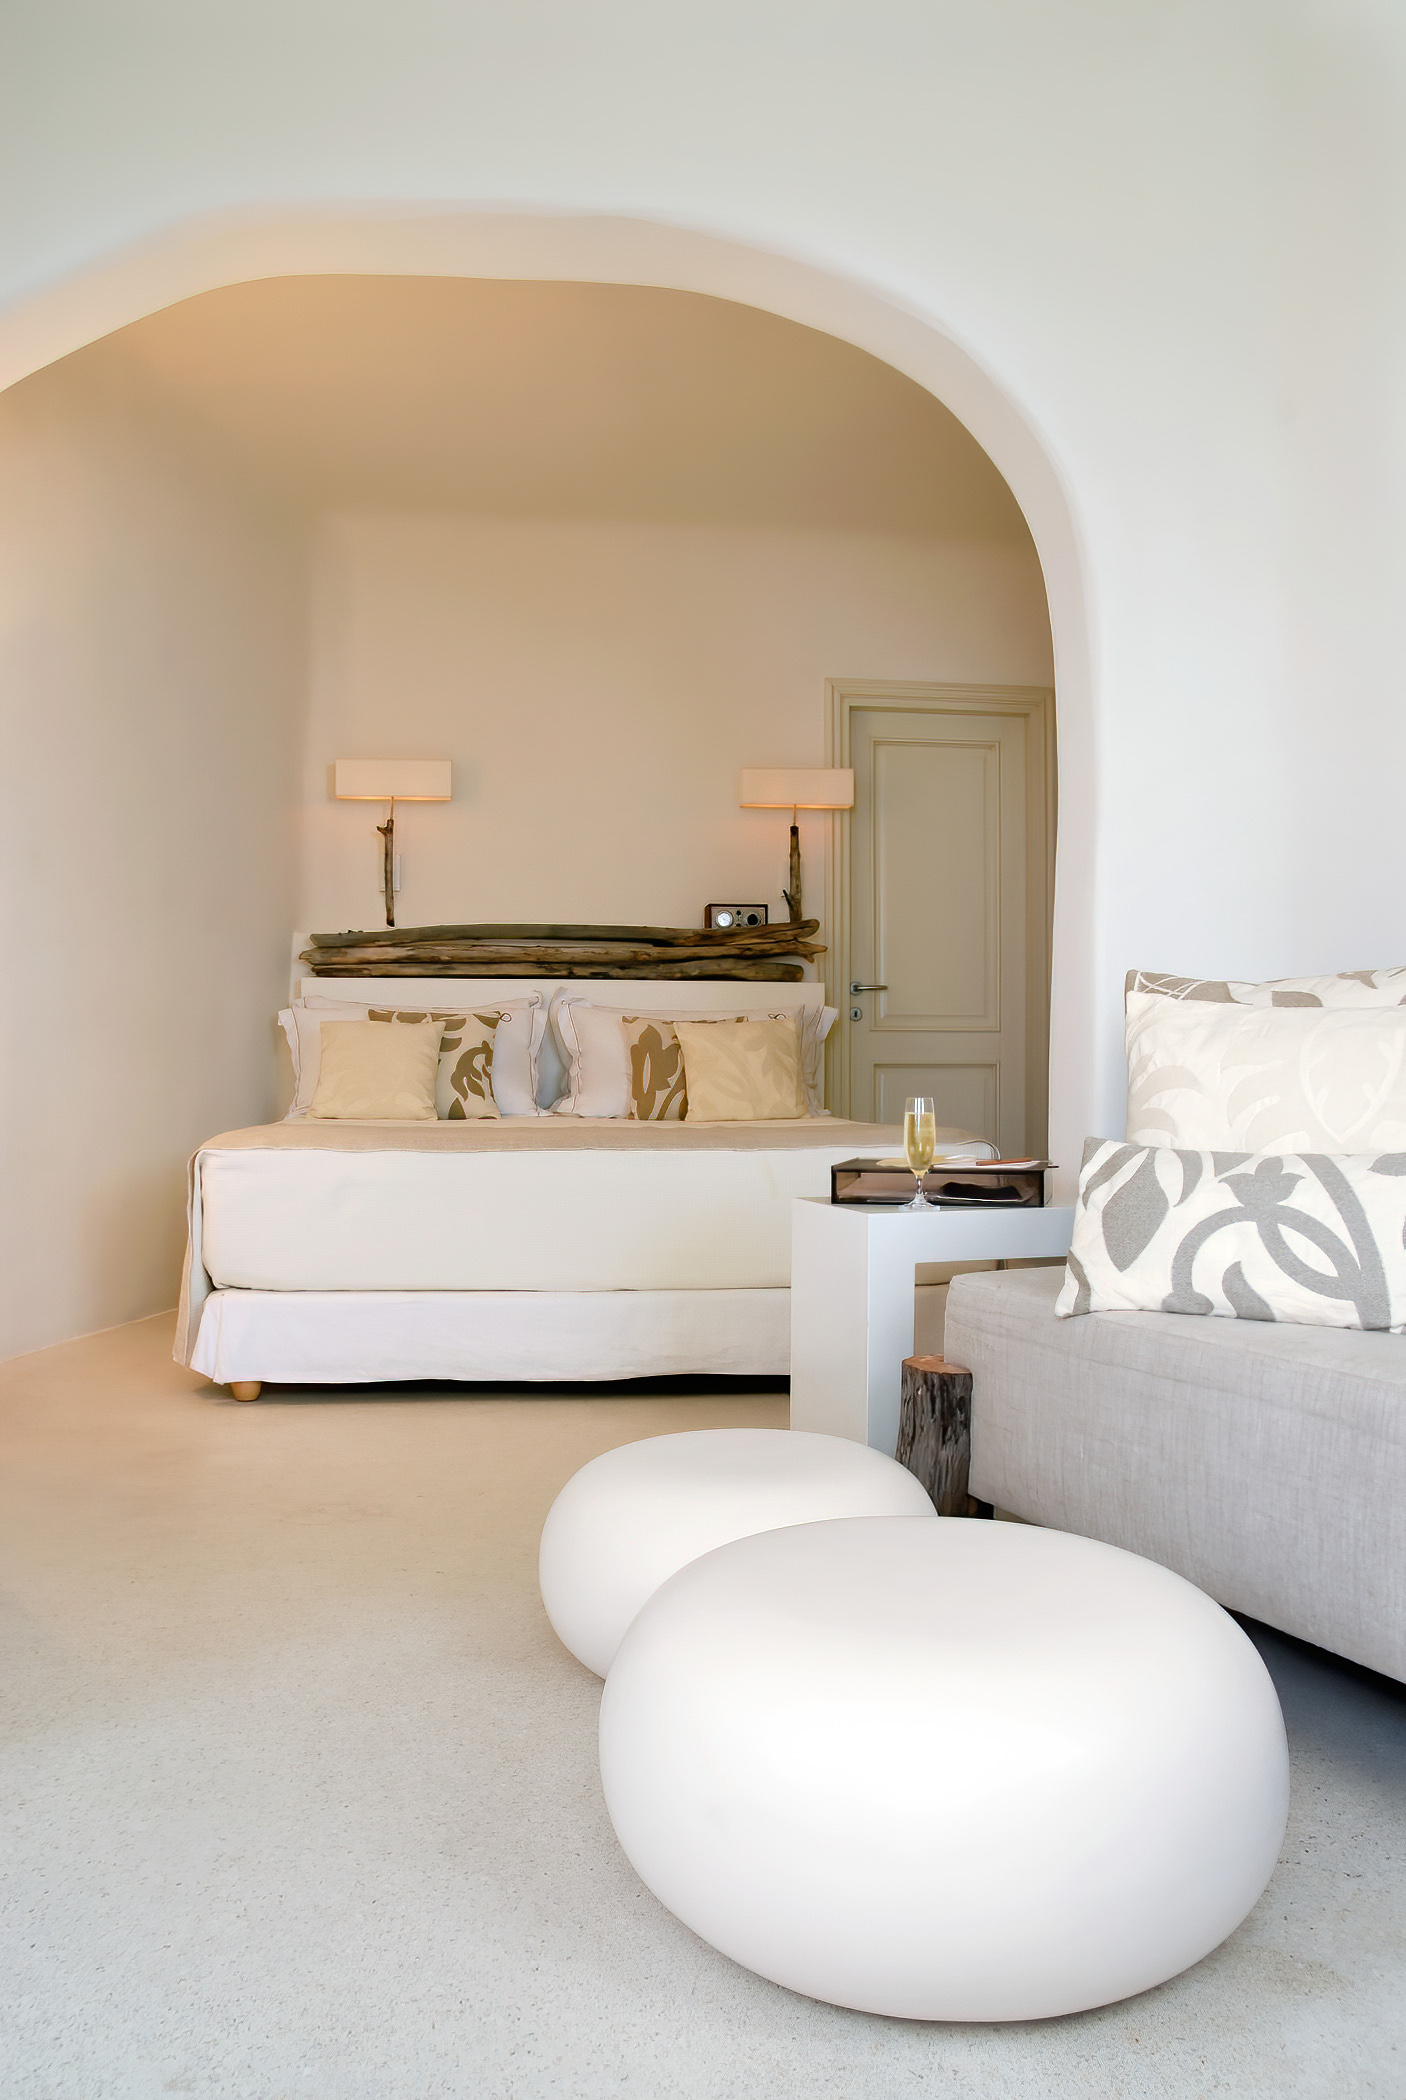 Mystique Hotel Santorini – Oia, Santorini Island, Greece – Bedroom